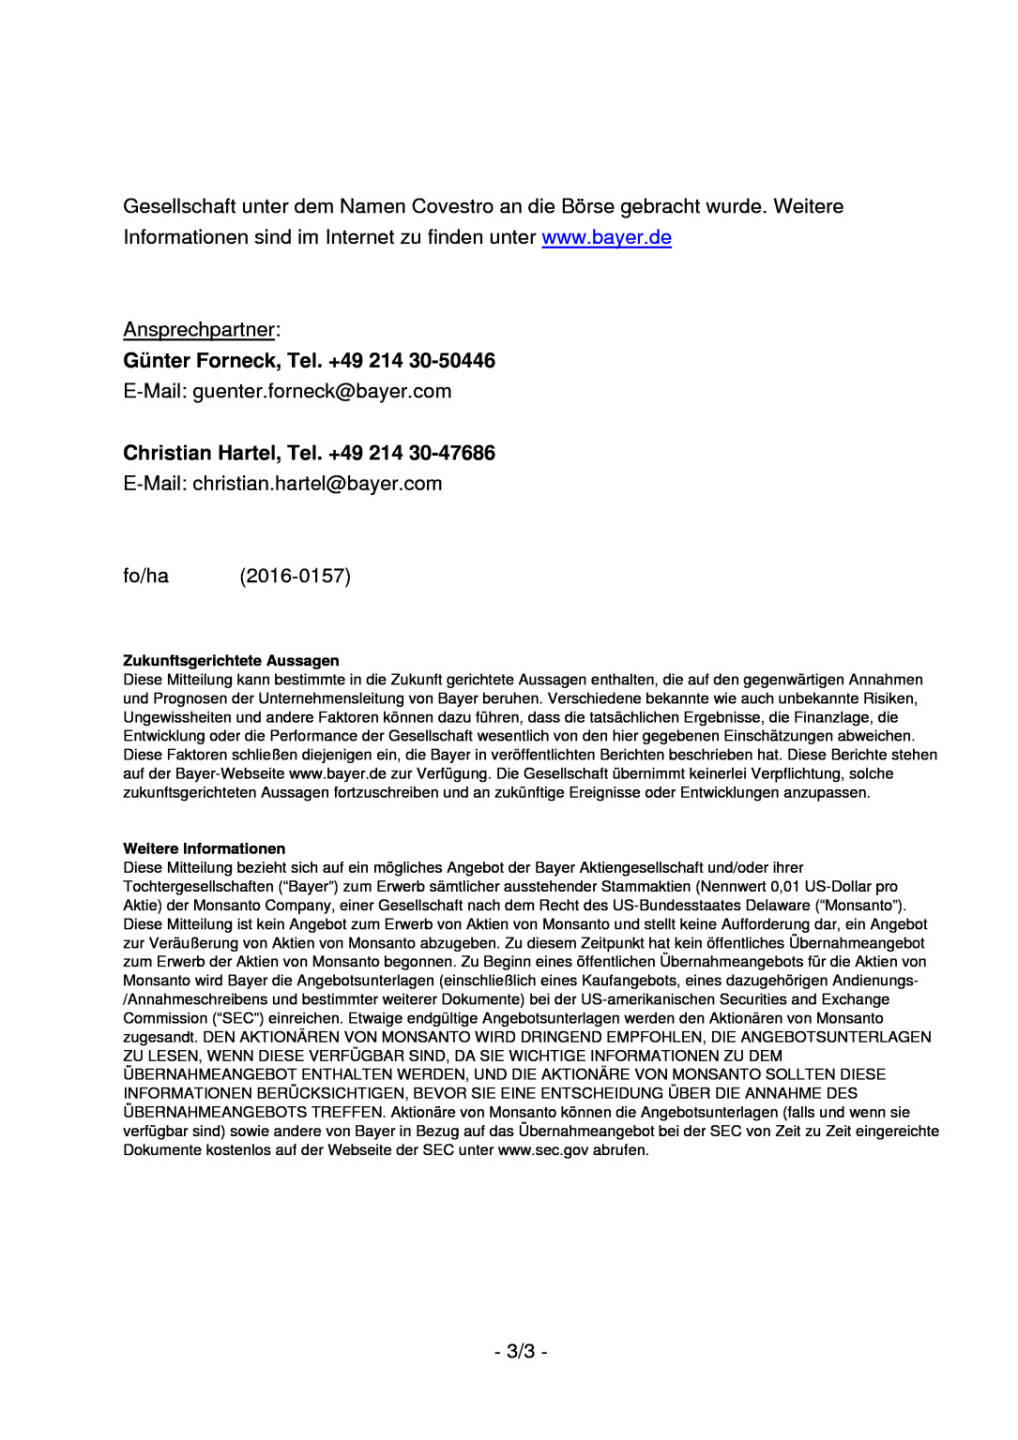 Bayer erhöht Angebot für Monsanto, Seite 3/3, komplettes Dokument unter http://boerse-social.com/static/uploads/file_1418_bayer_erhoht_angebot_fur_monsanto.pdf